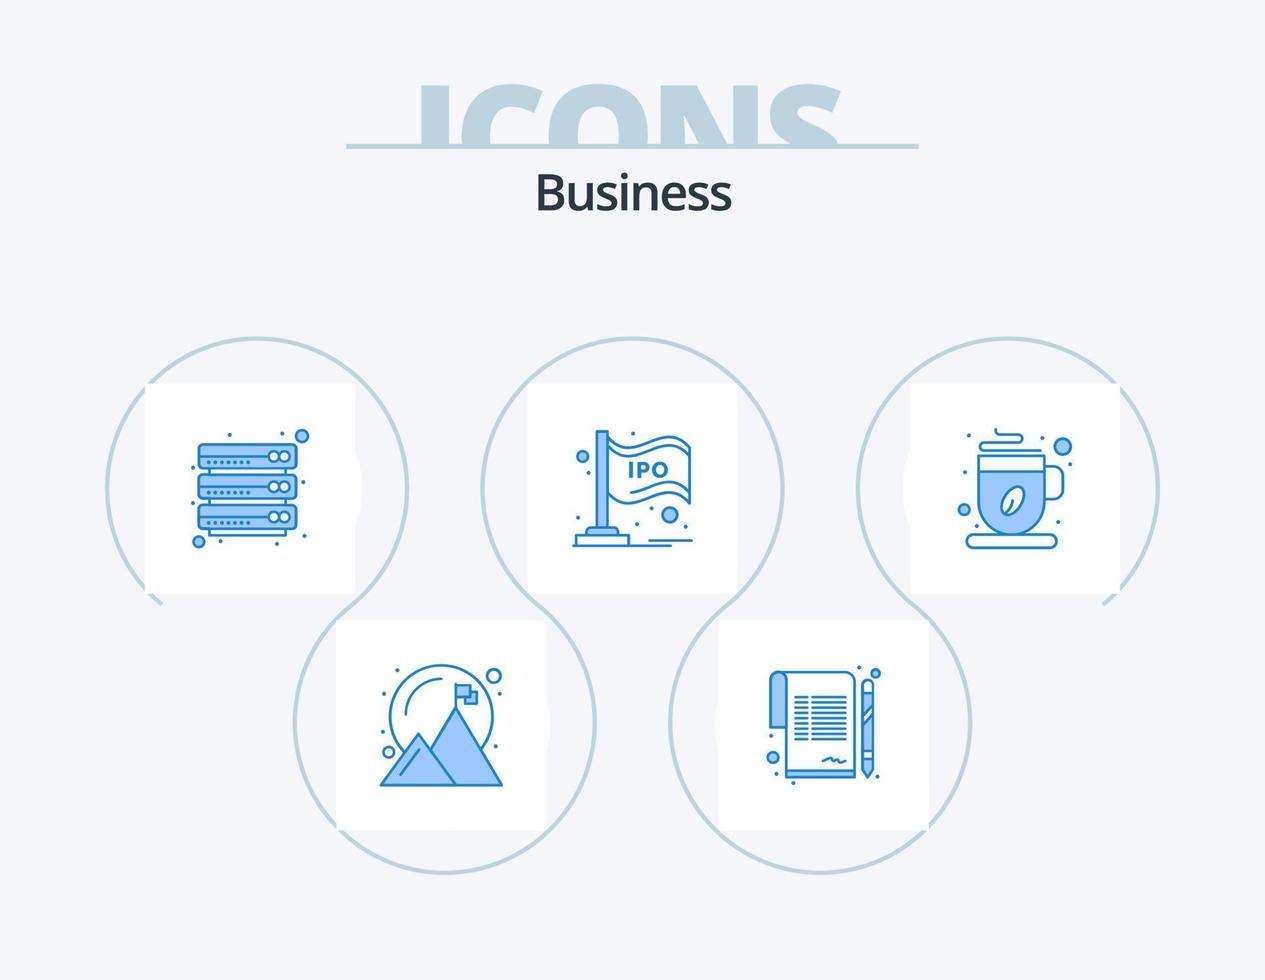 paquete de iconos azul de negocios 5 diseño de iconos. café. bar. nube. existencias. salida a bolsa vector